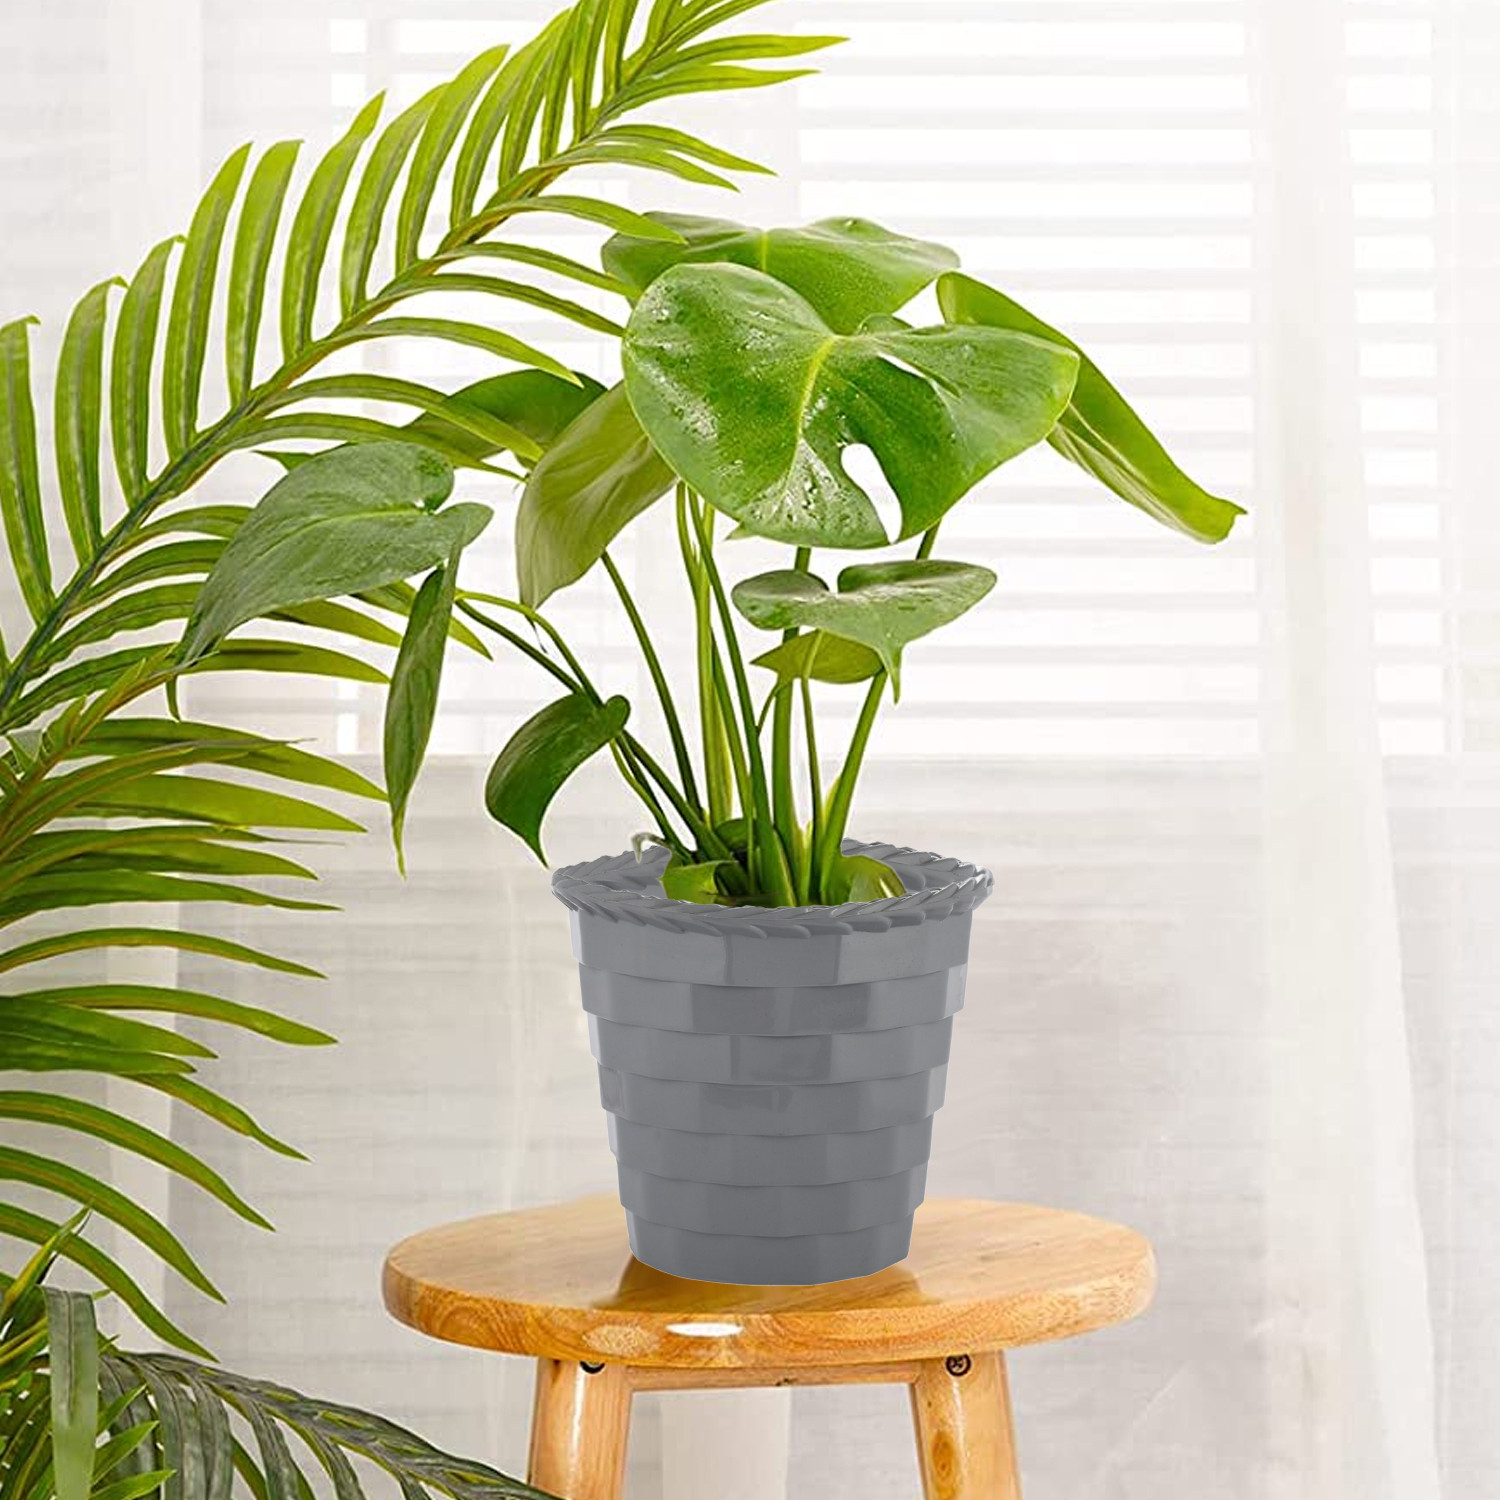 Kuber Industries Brick Flower Pot|Durable Plastic Flower Pots|Planters for Home Décor|Garden|Living Room|Balcony|8 Inch|Pack of 2 (Orange & Grey)